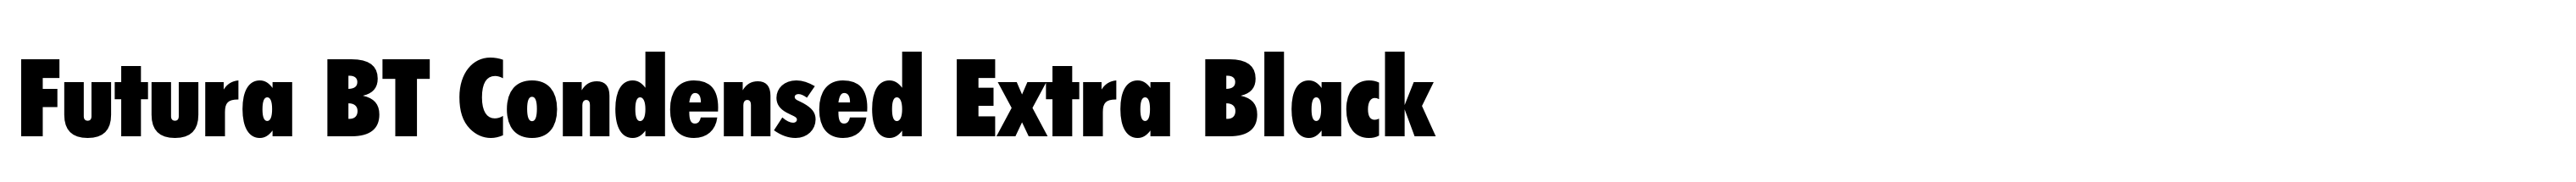 Futura BT Condensed Extra Black